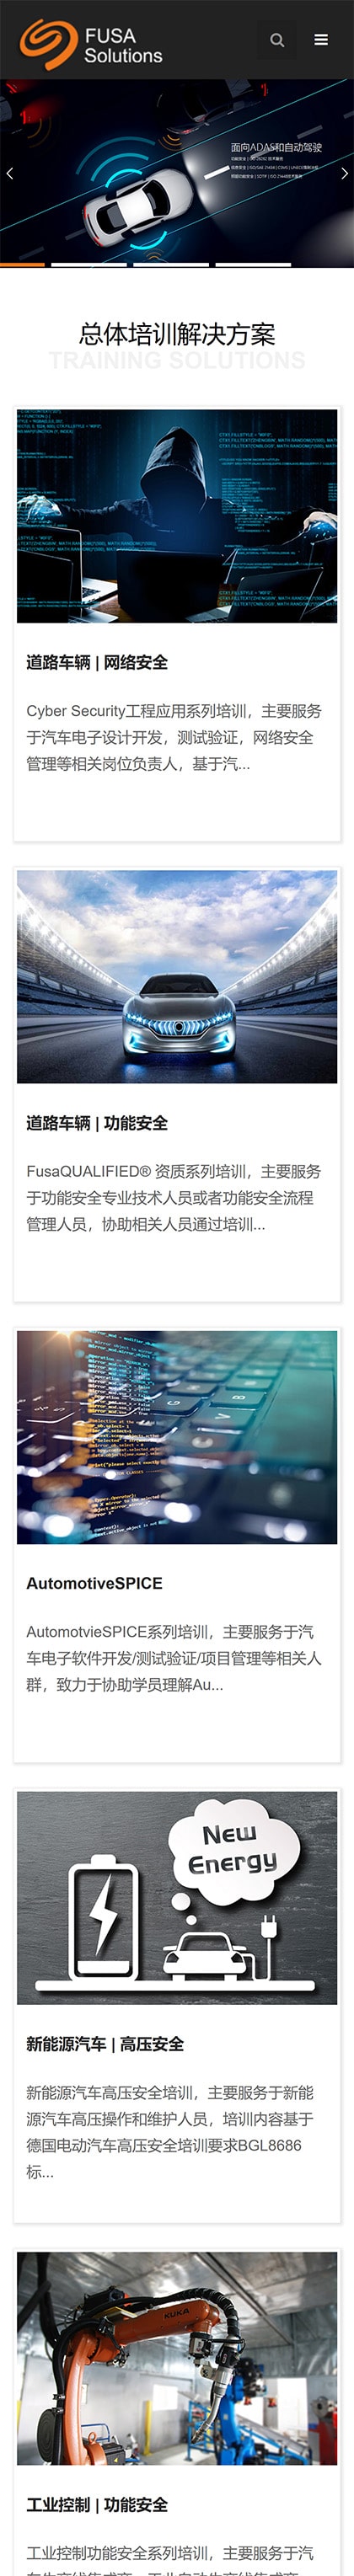 FUSA Solutions 手机端预览图